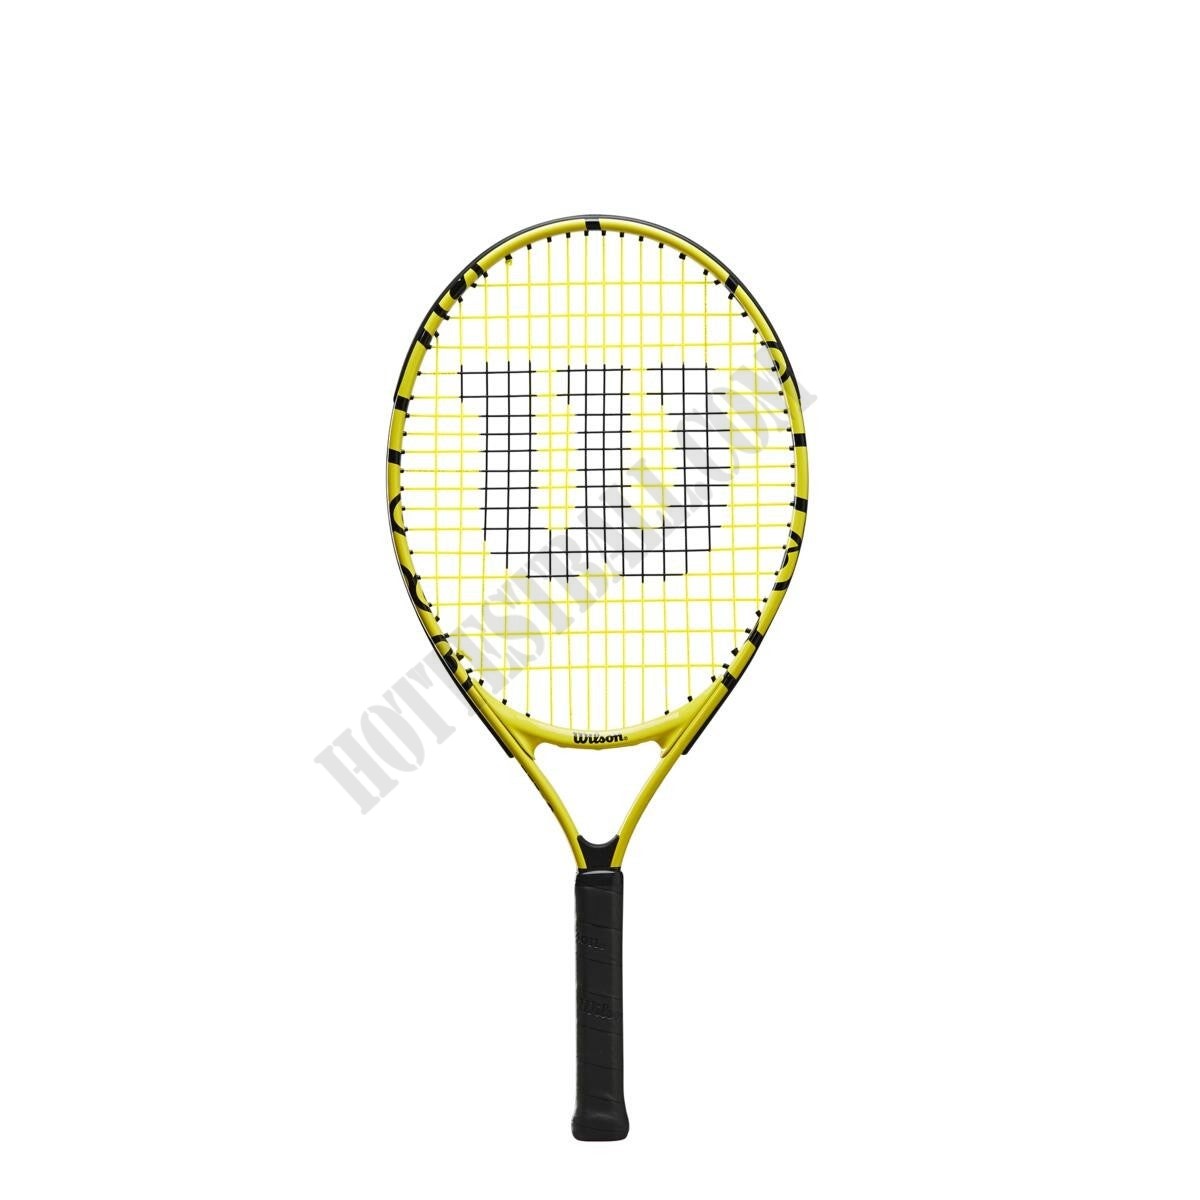 Minions 23 Tennis Racket - Wilson Discount Store - -0